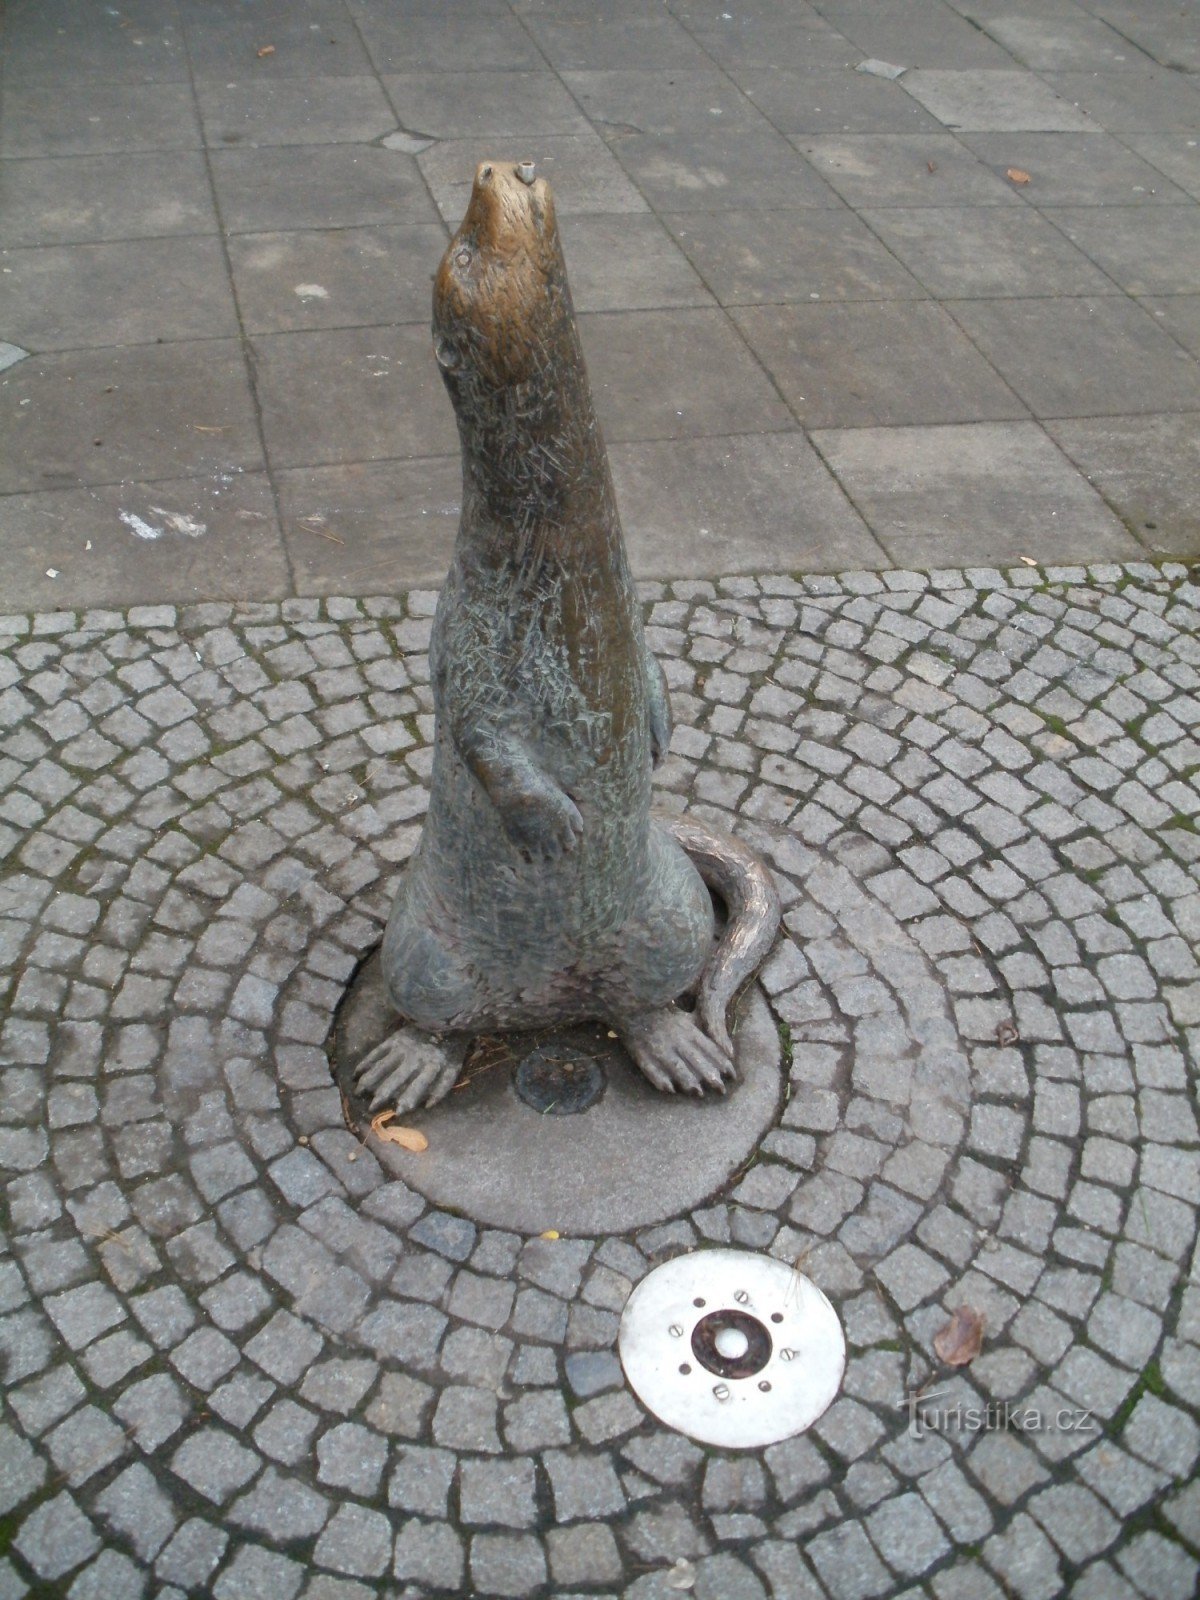 Hradec Králové - square with the otter Eliška